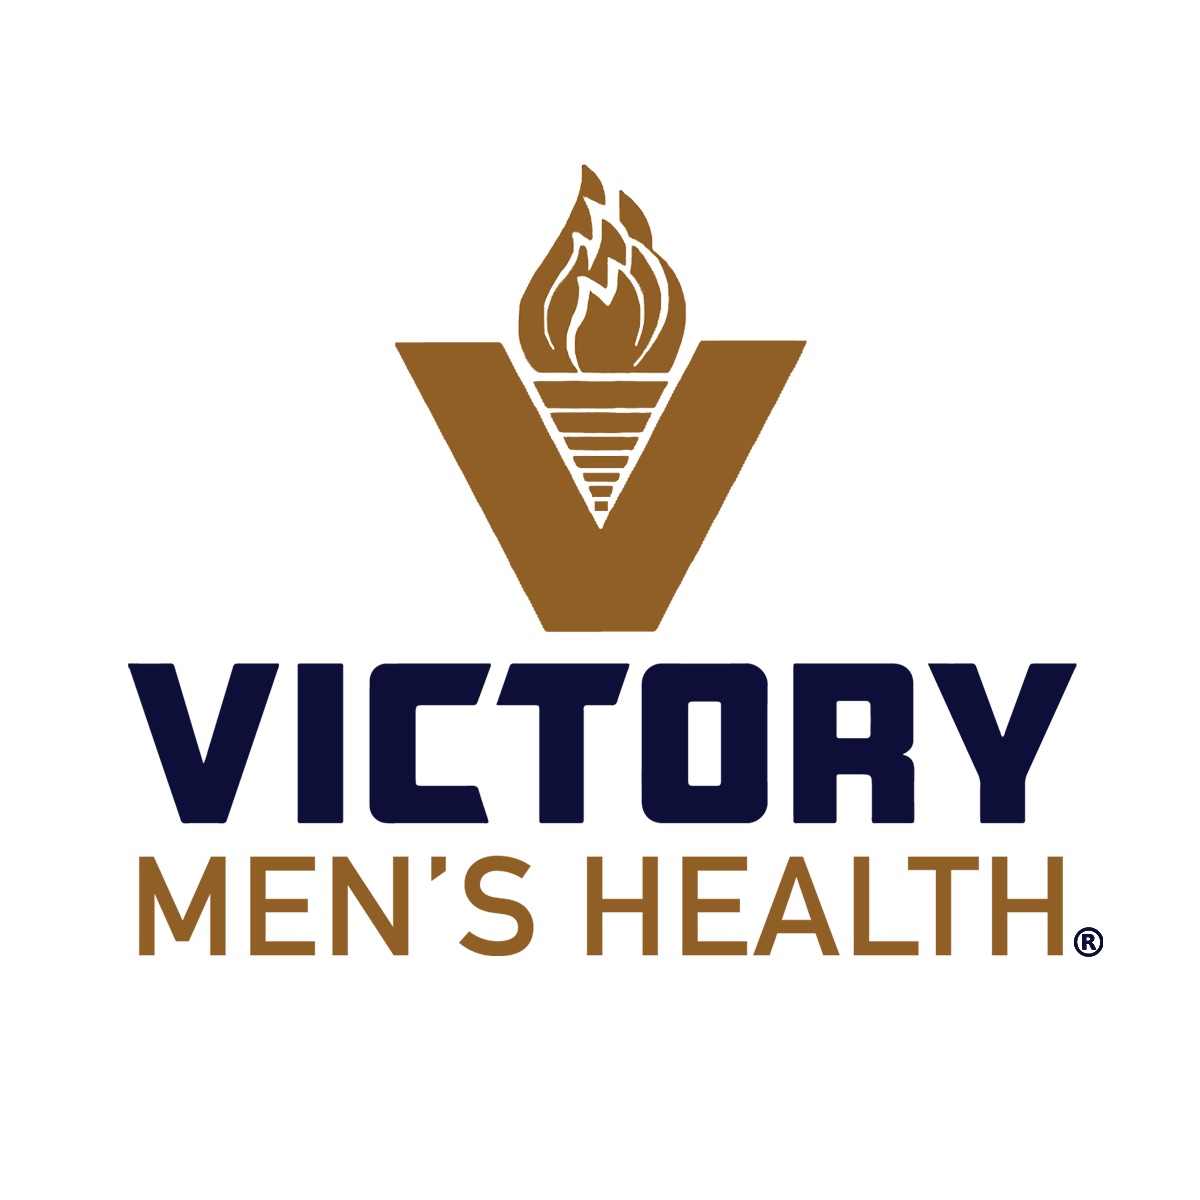 Victory Men’s Health